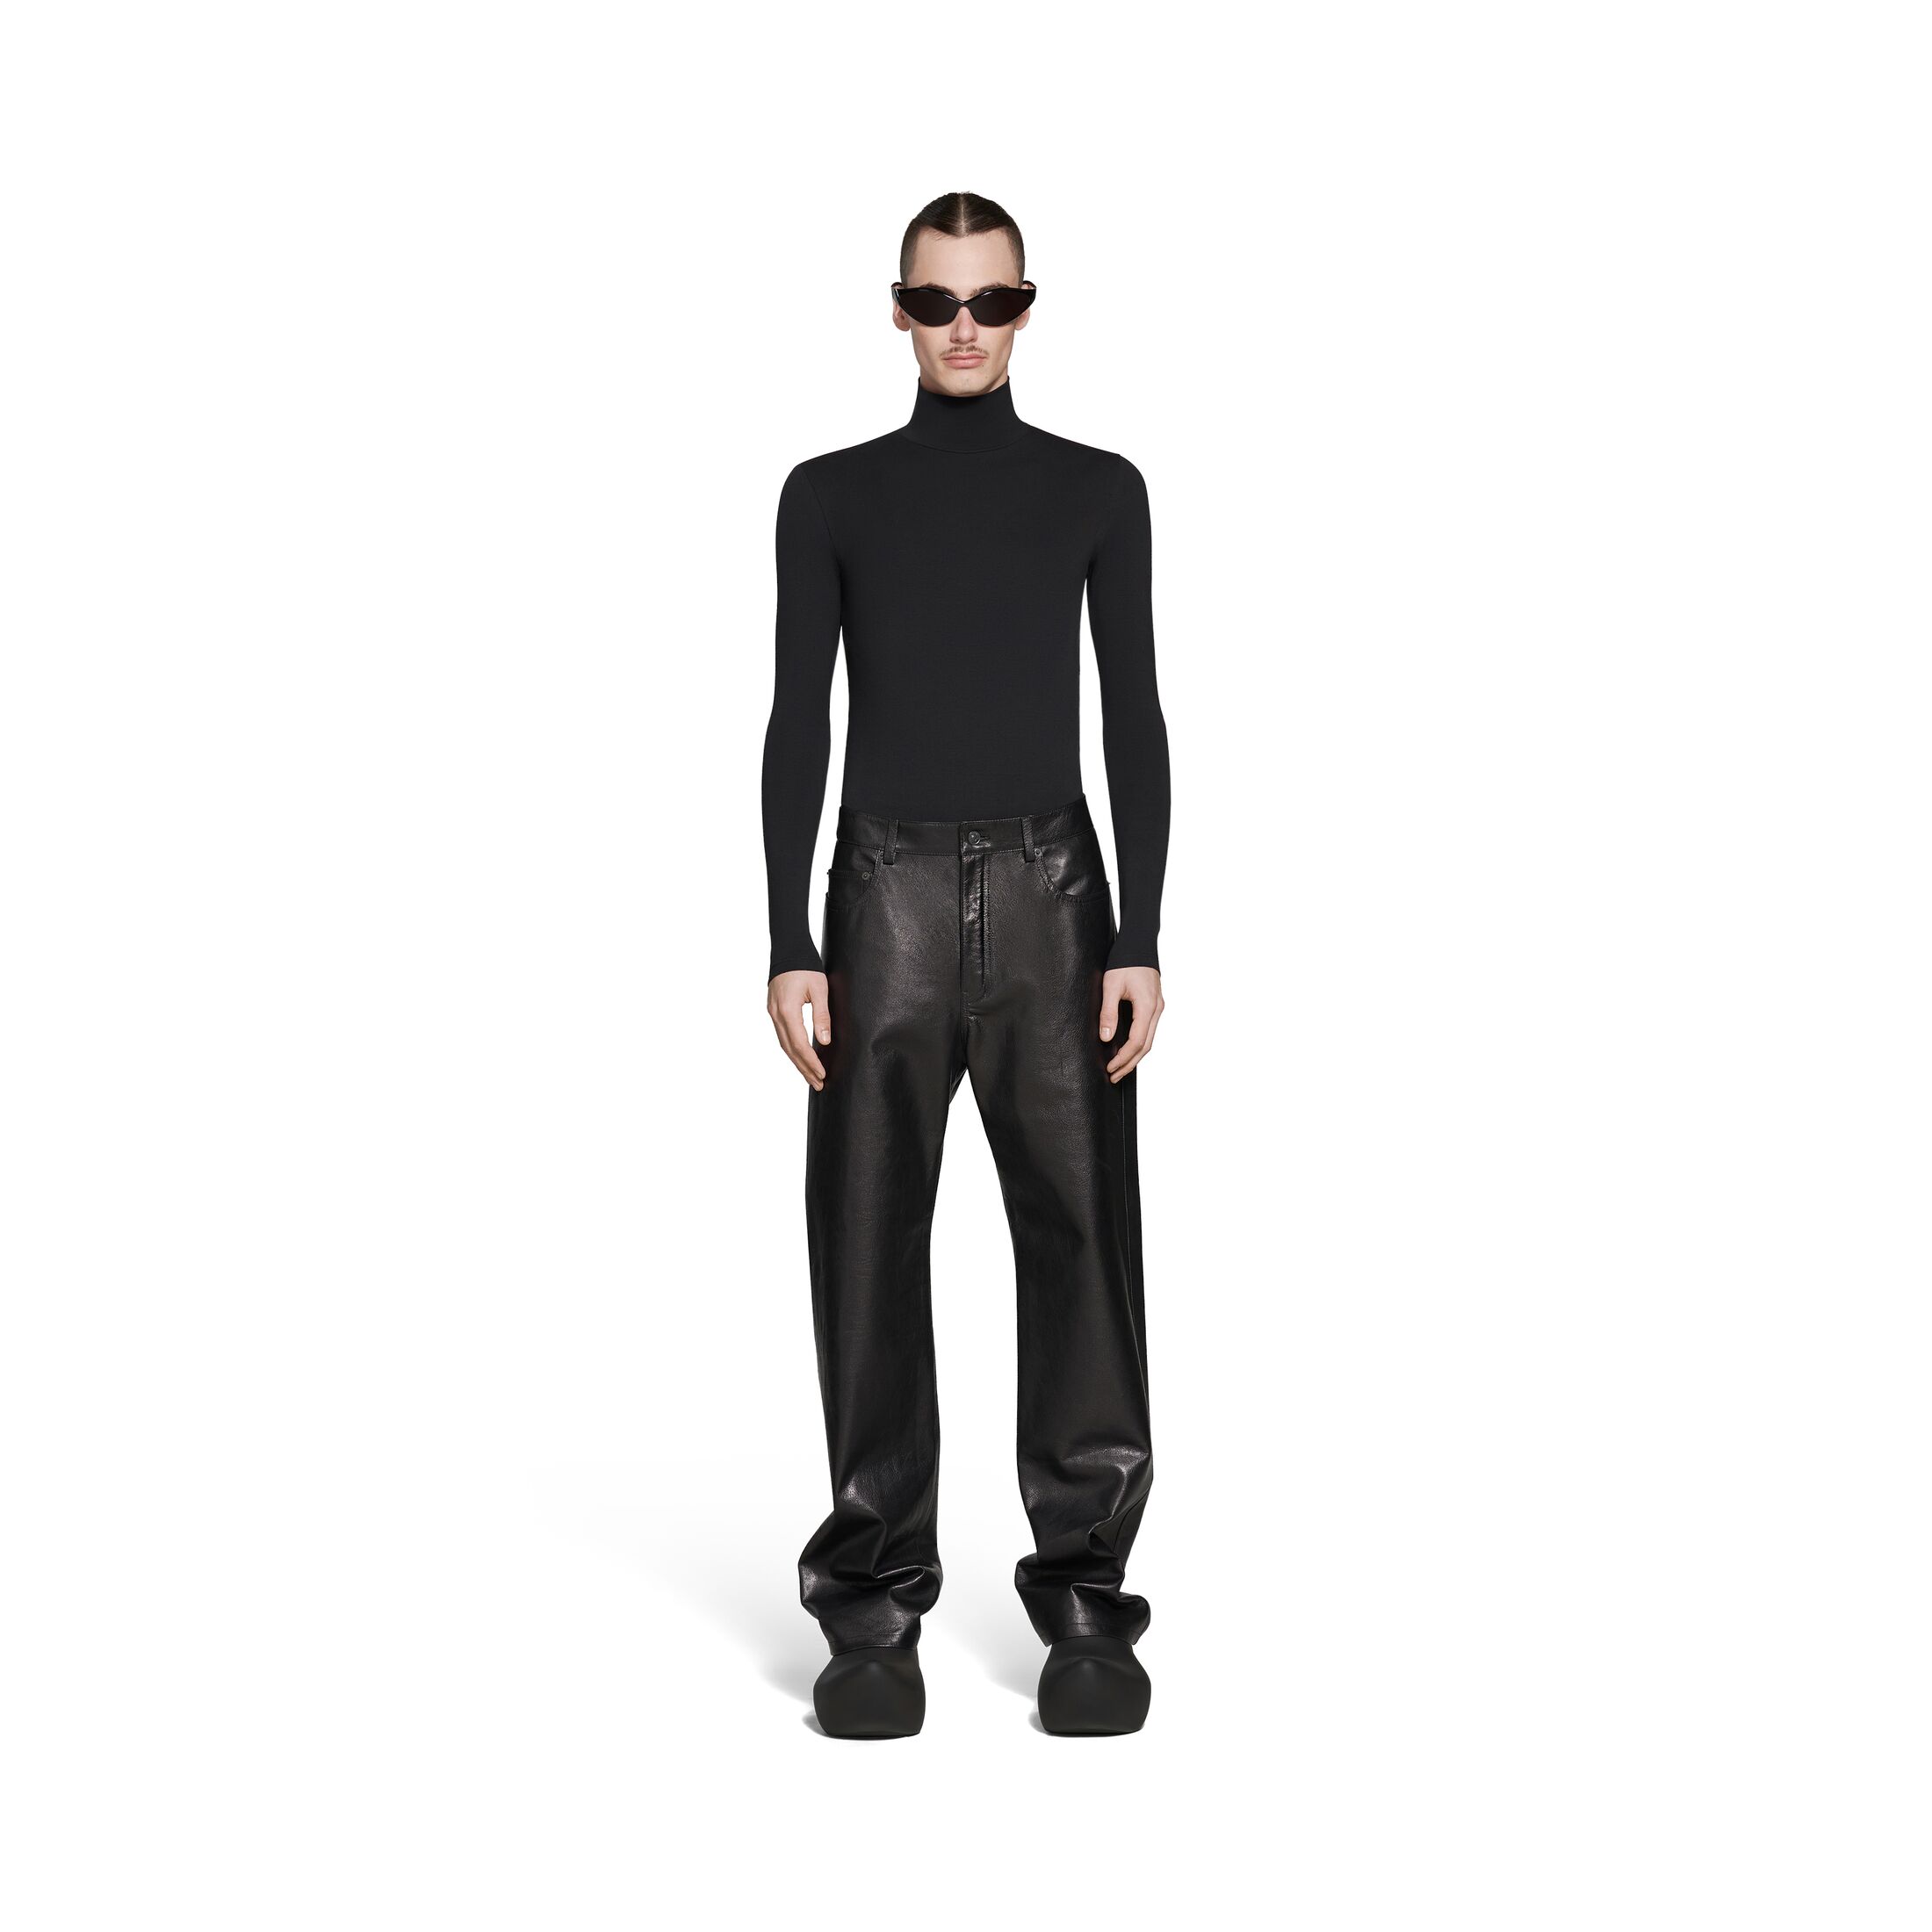 Medium Fit Pants in Black | Balenciaga US